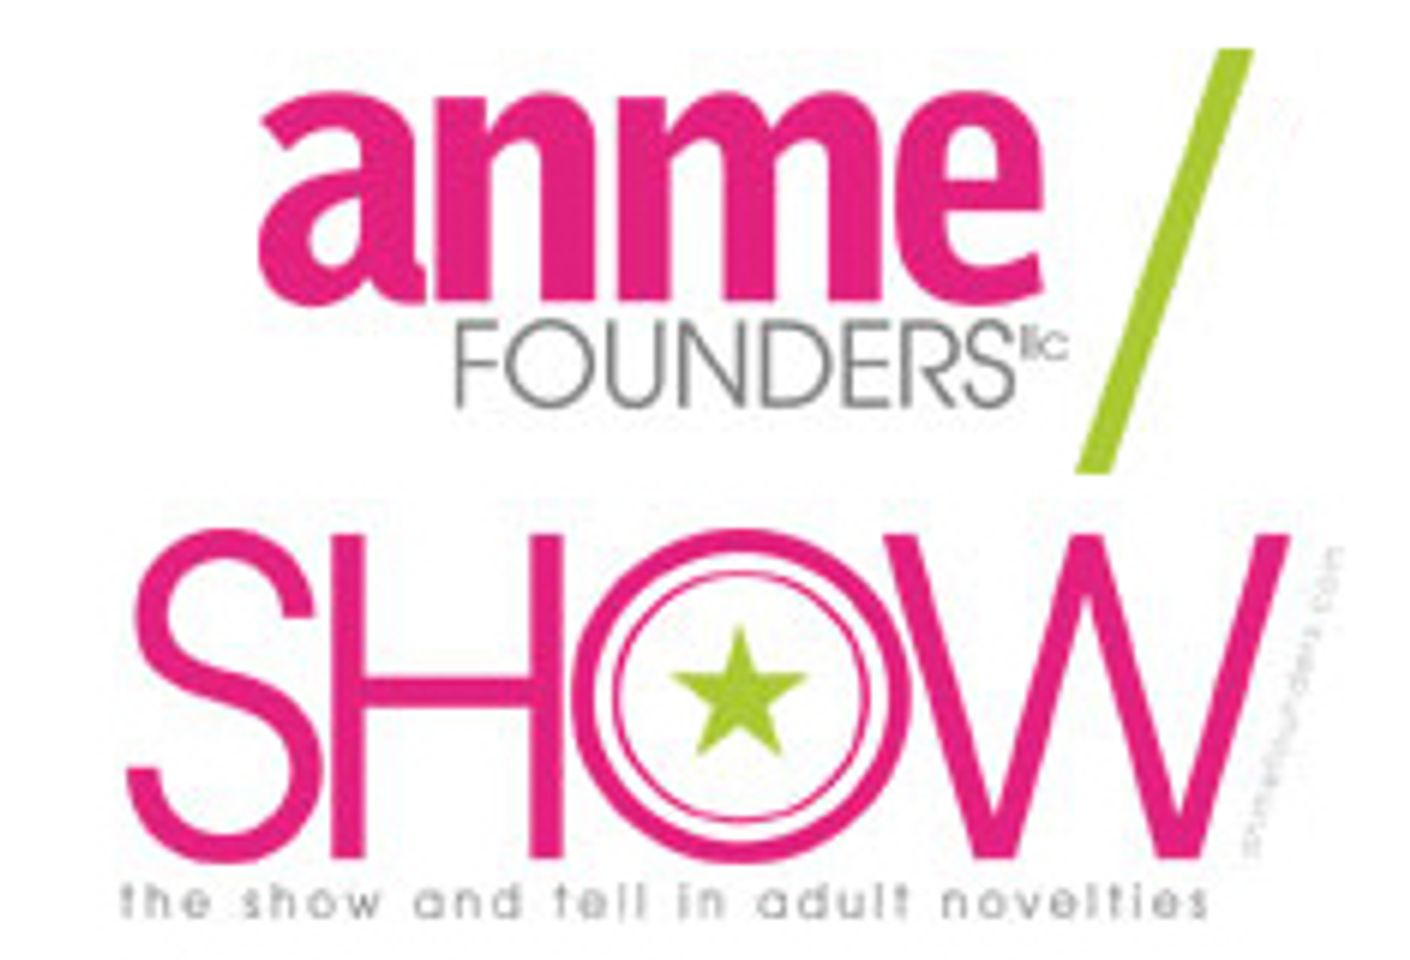 StorErotica Named Media Sponsor of 2010 ANME Founders Show